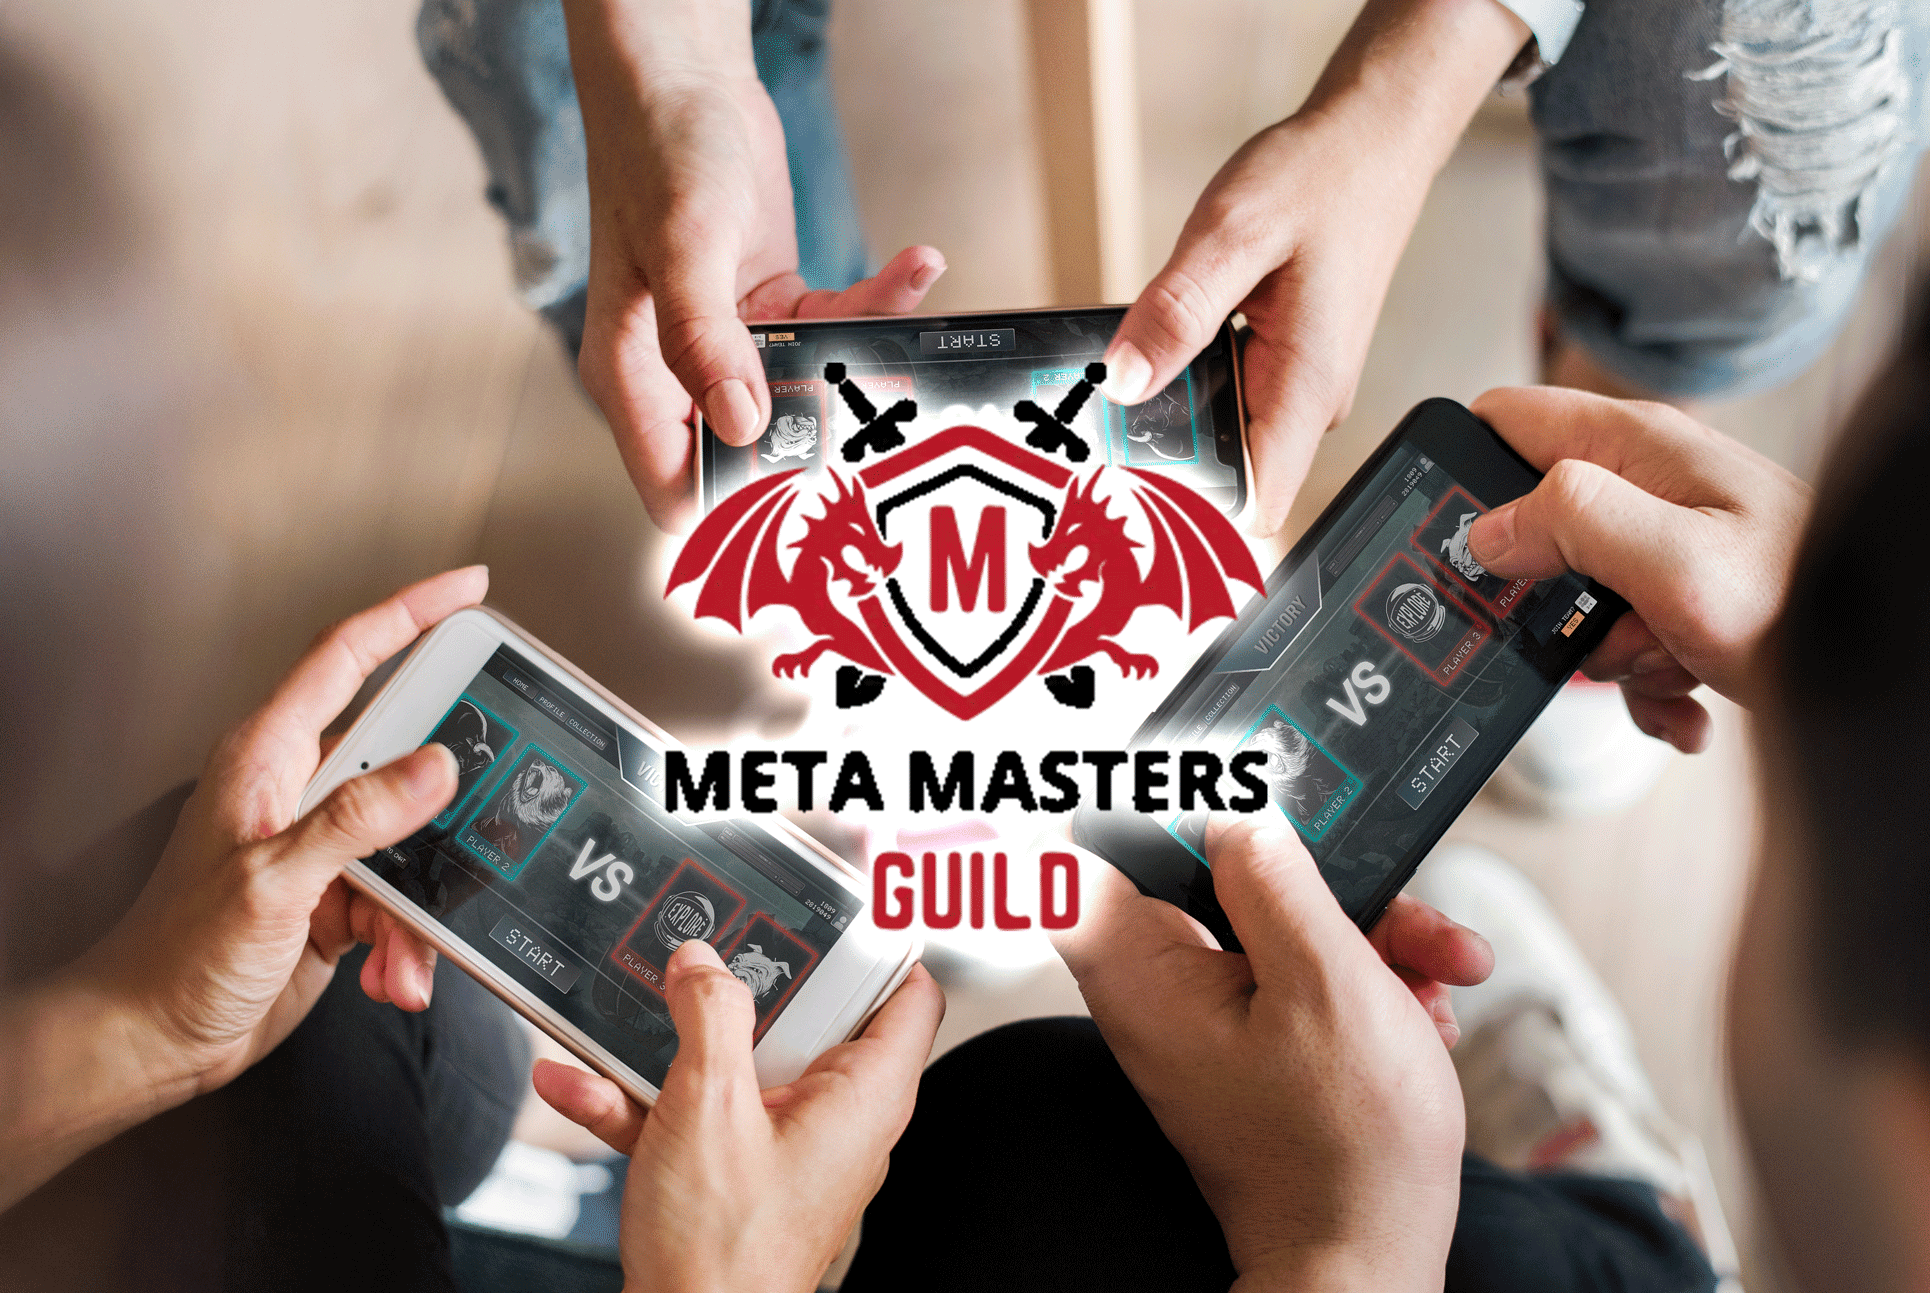 Meta Masters Guild MEMAG $MEMAG Coin Kryptowaehrung GameFi Plattform fuer Mobilegames 2